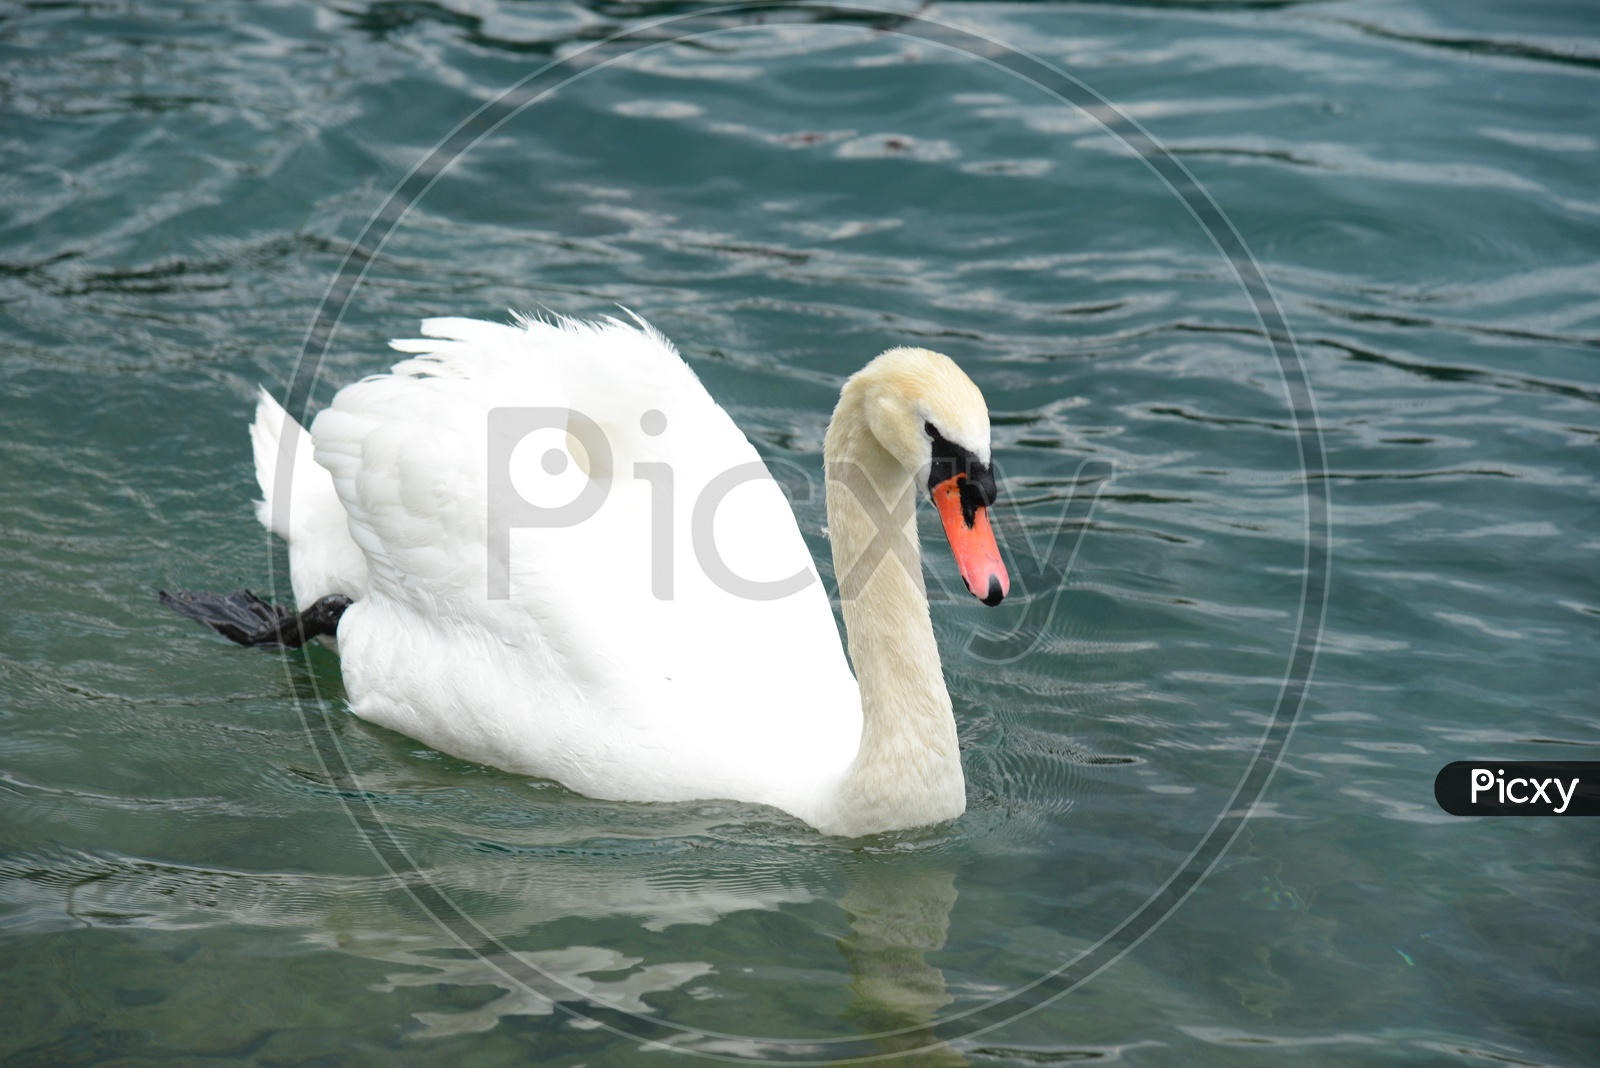 White Swan In a Lake